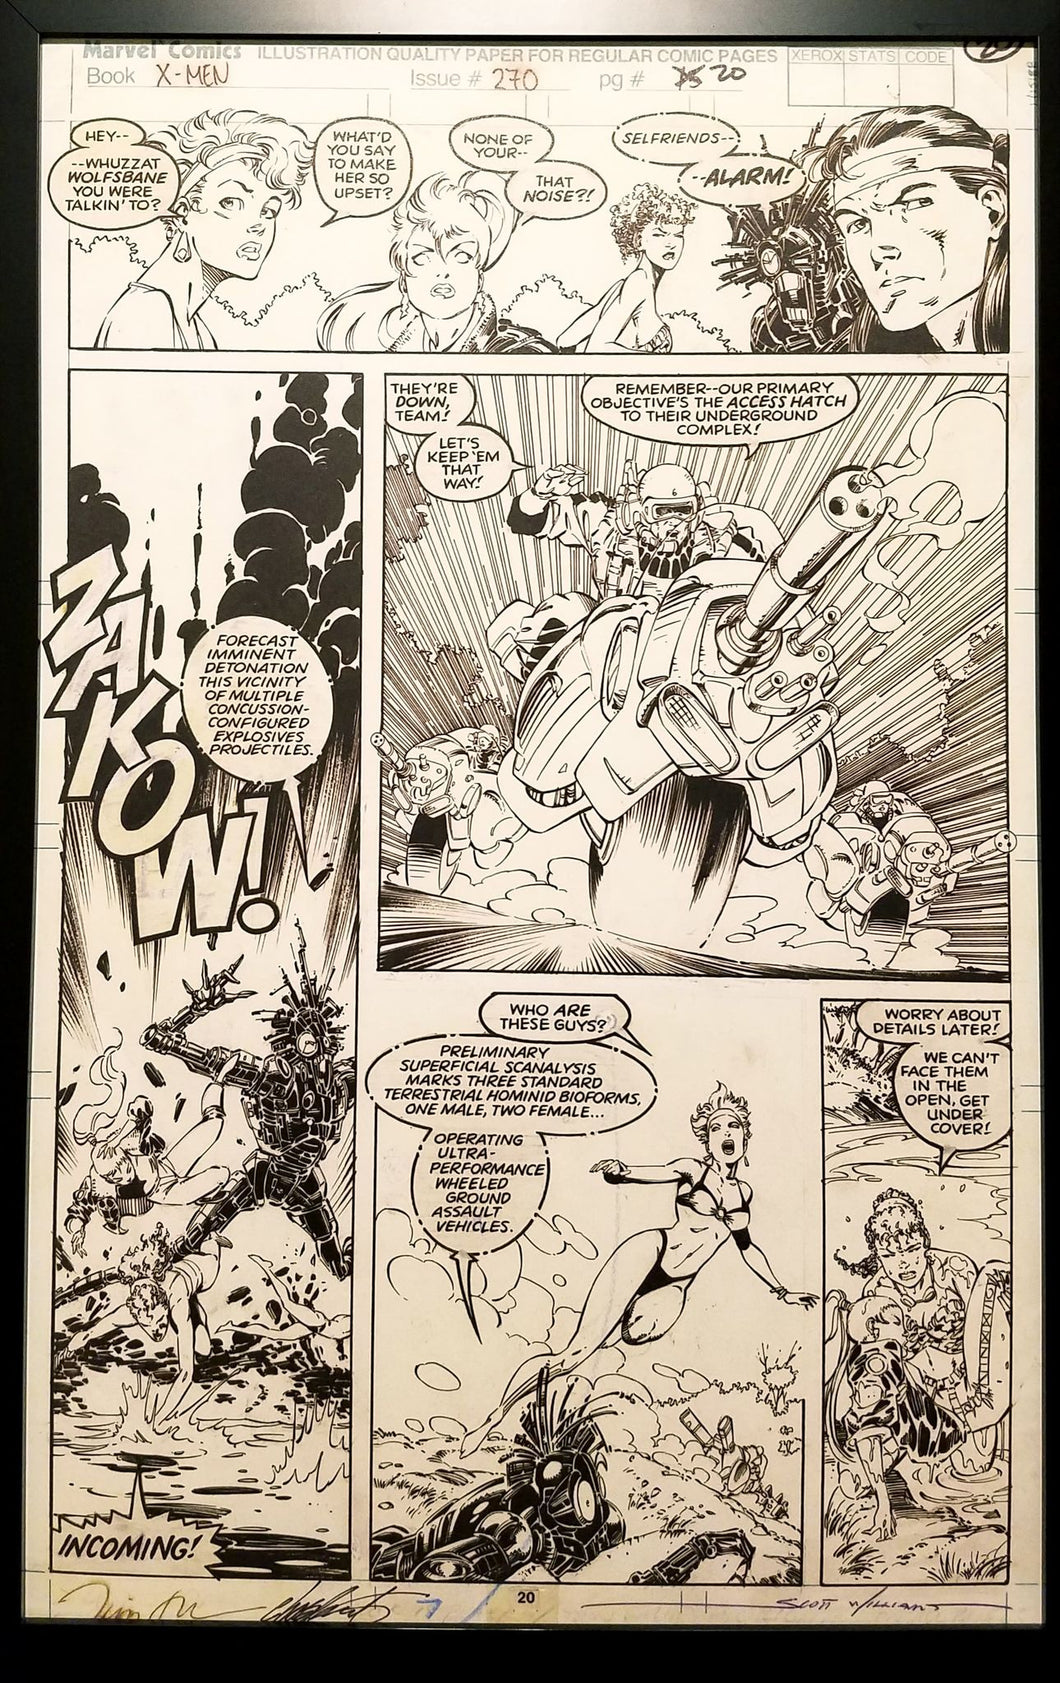 Uncanny X-Men #270 pg. 20 swimsuit Jim Lee 11x17 FRAMED Original Art Poster Marvel Comics